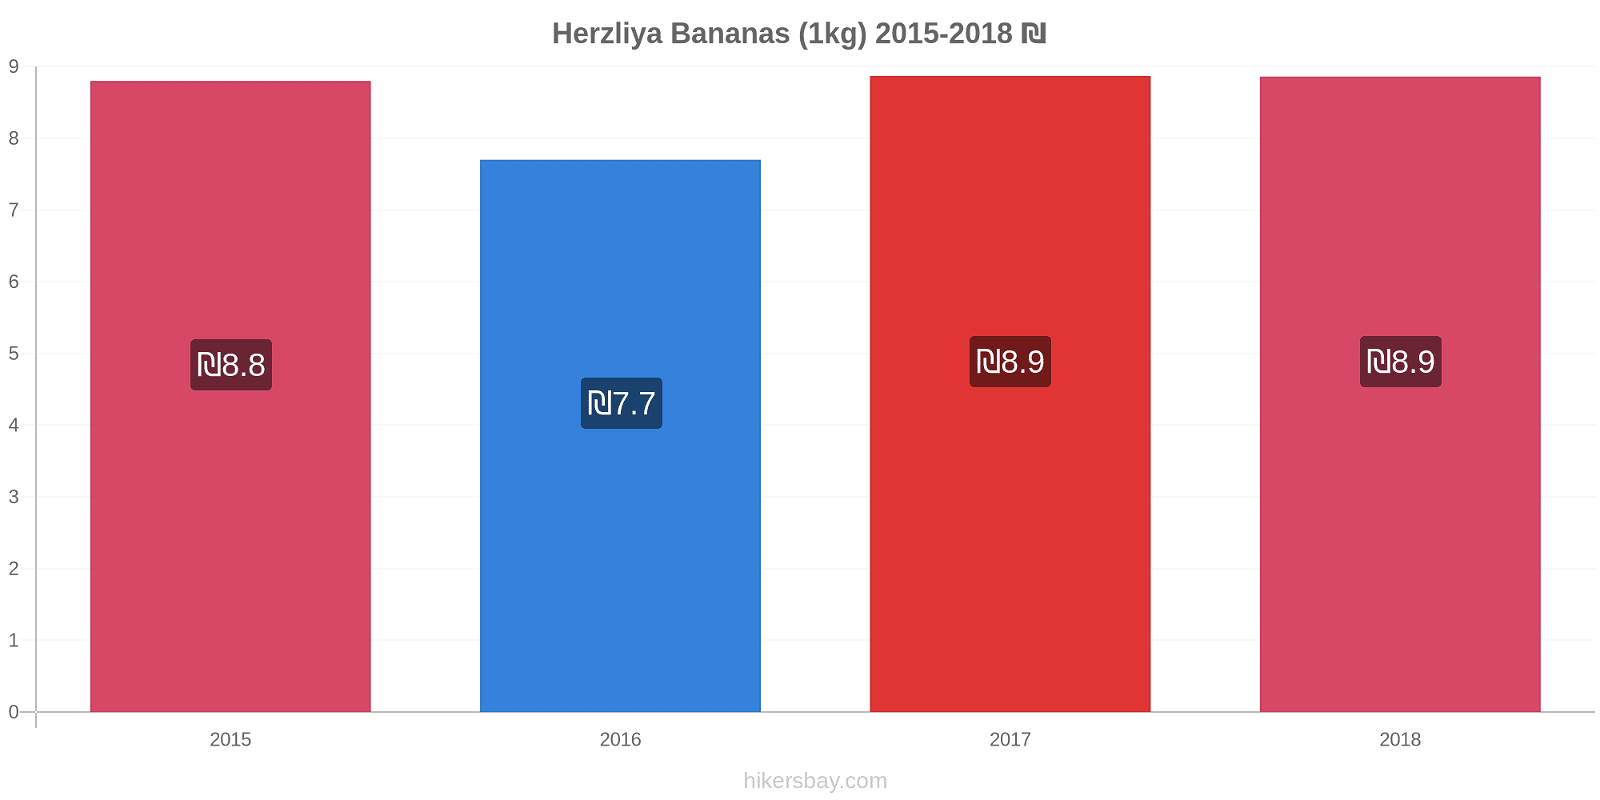 Herzliya price changes Bananas (1kg) hikersbay.com